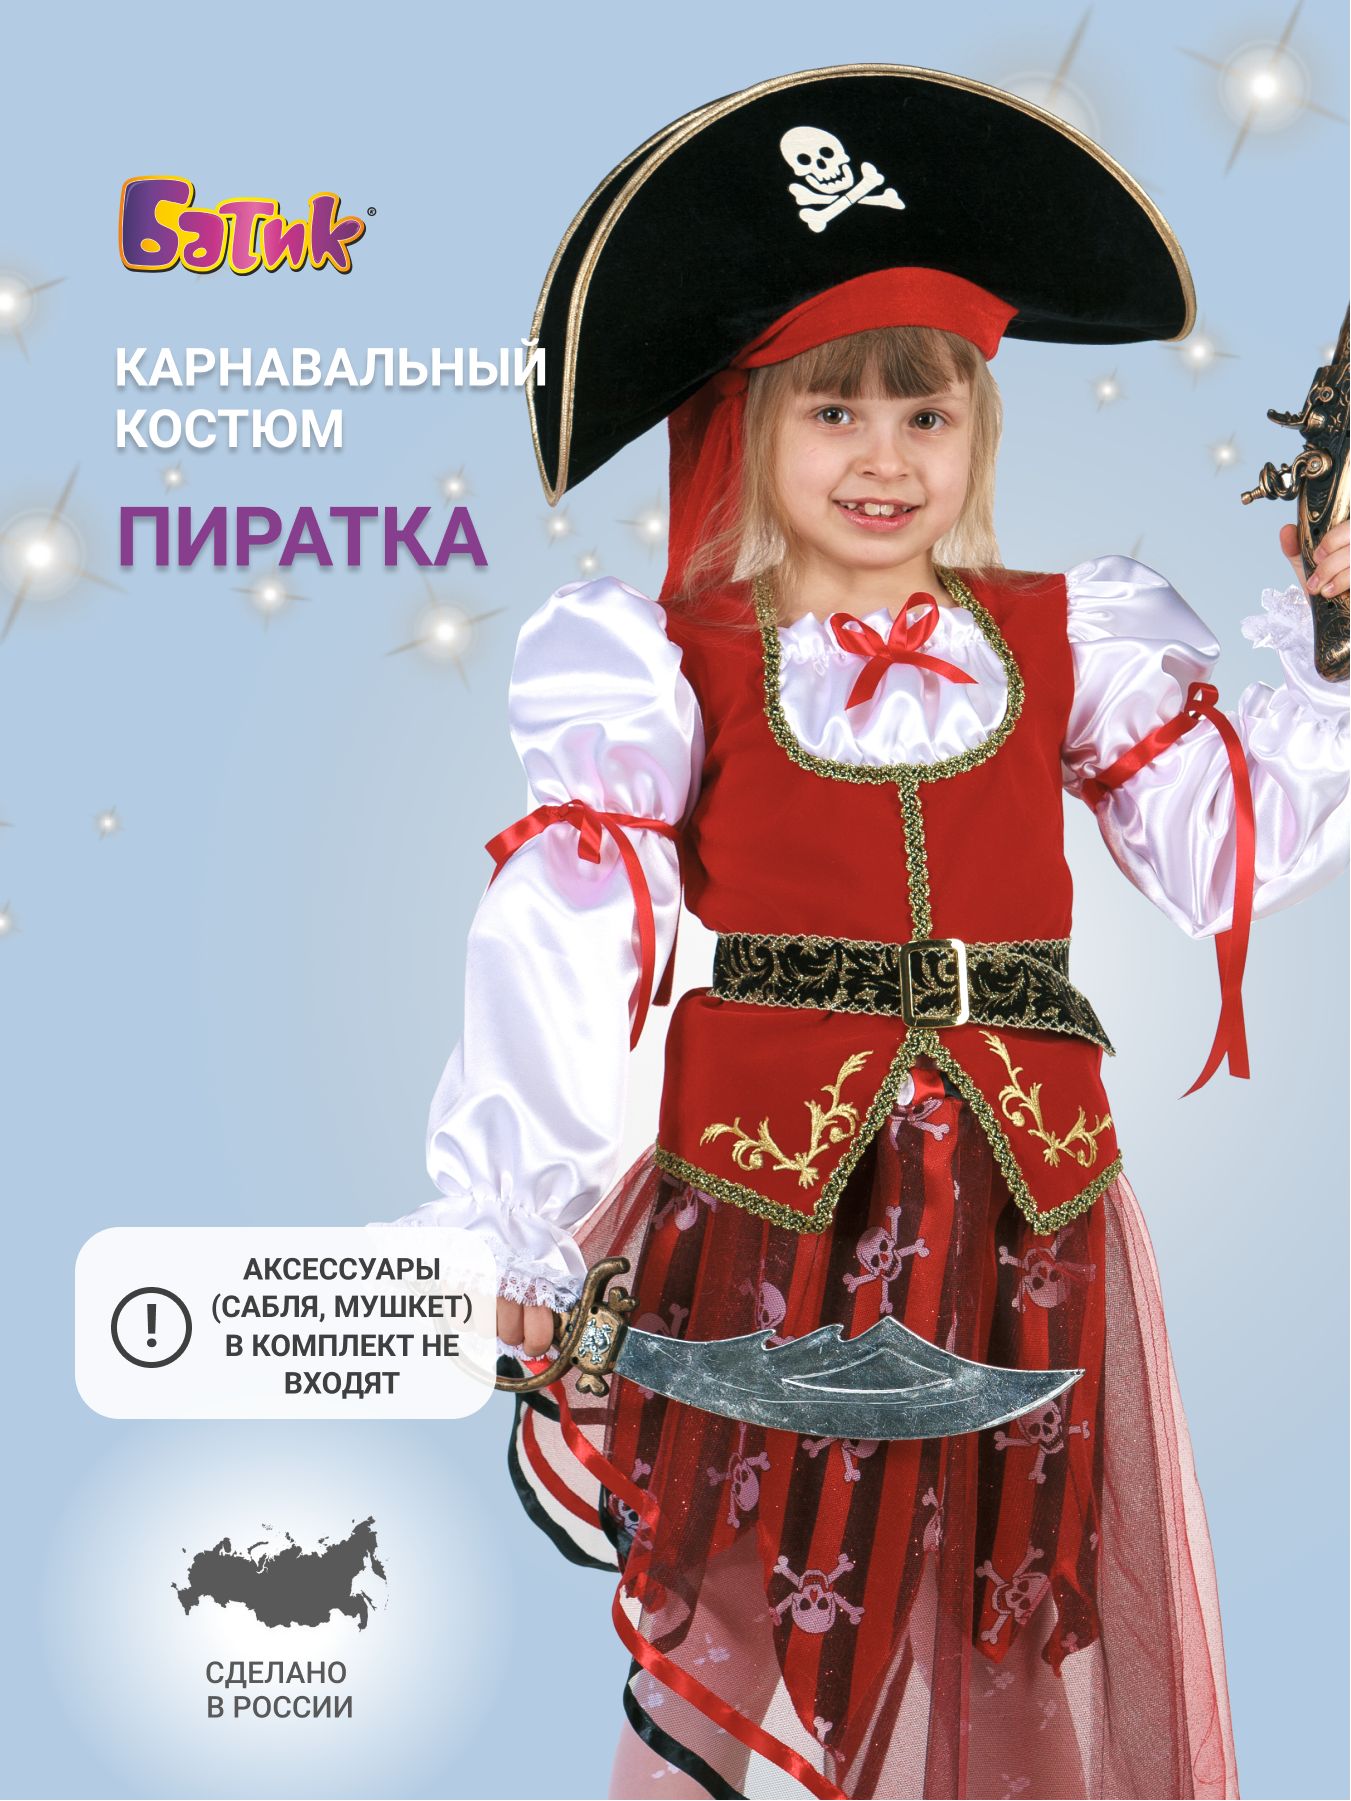 Костюм девушки пирата — Купить костюм девушки пирата на Новый Год и Хэллоуин